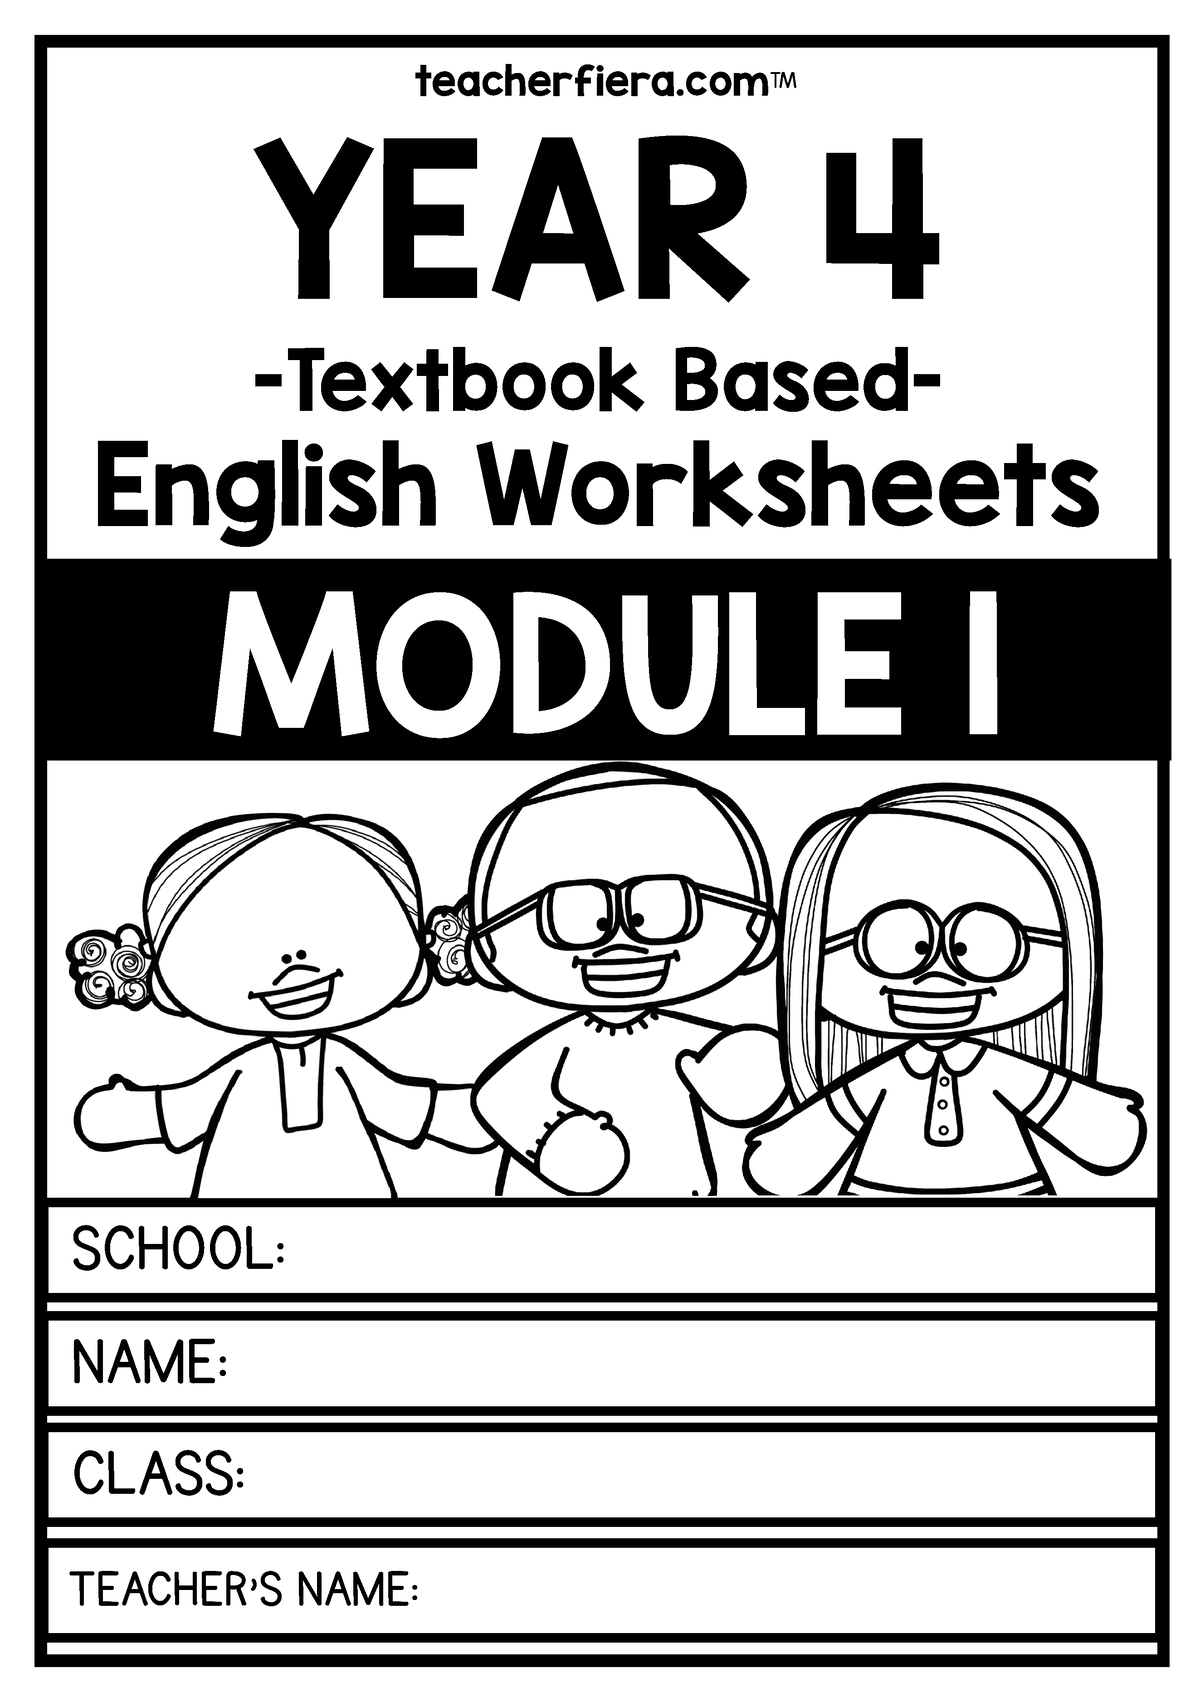 Y4 Module 1 Worksheets 4 CLASS TEACHER S NAME SCHOOL NAME MODULE 